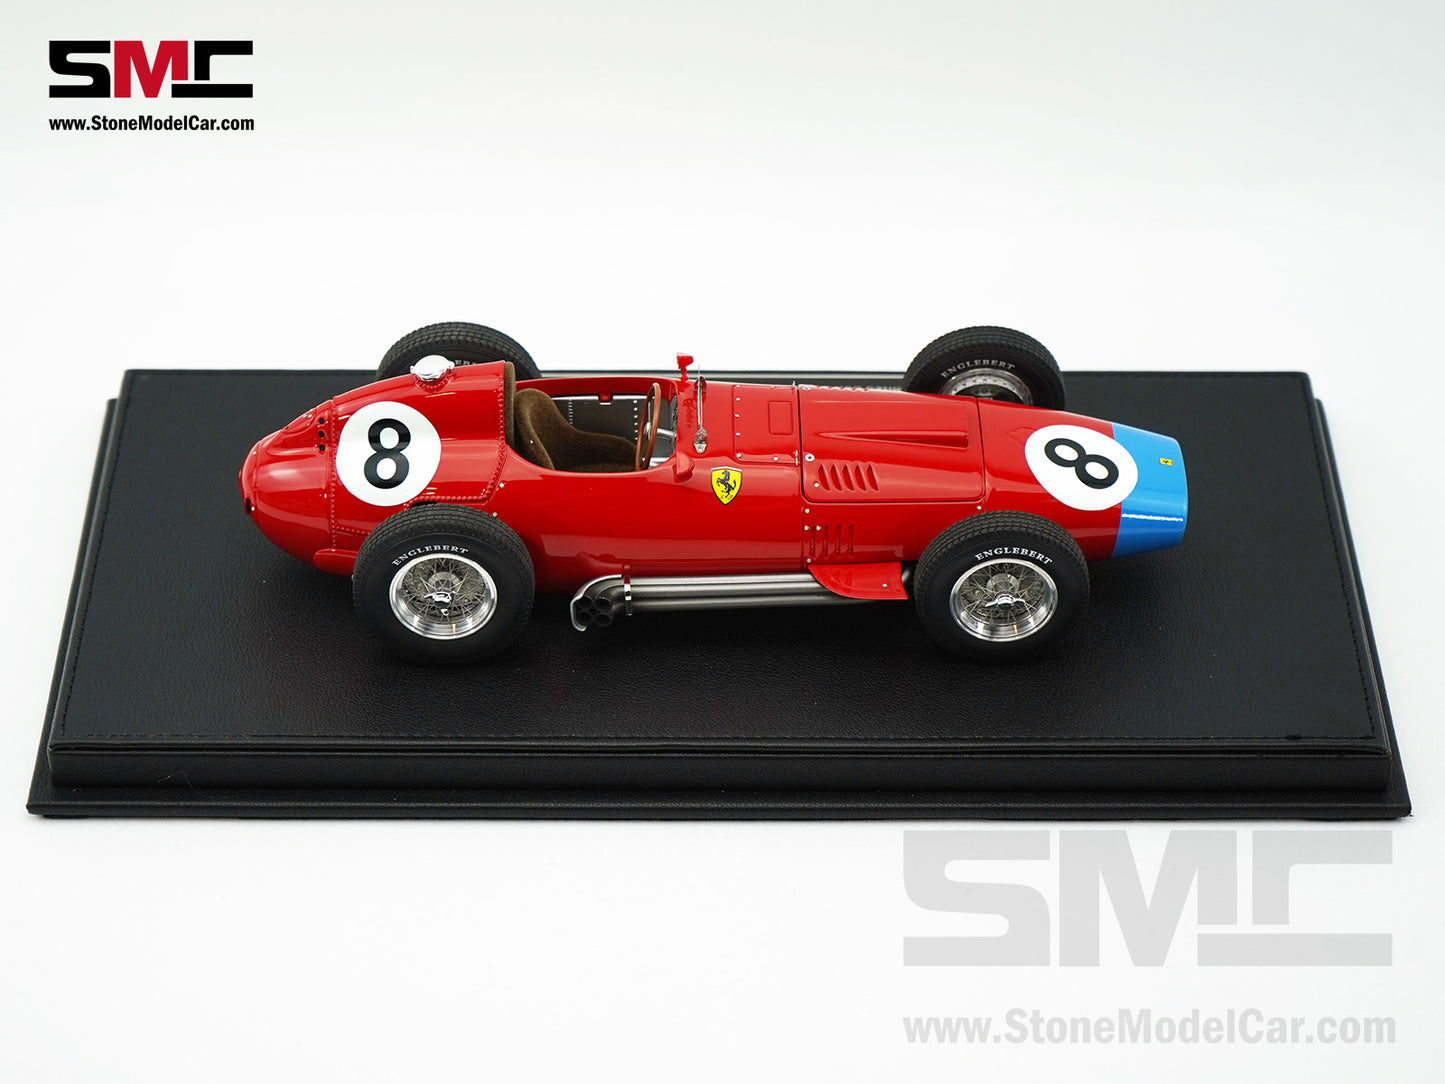 Ferrari F1 801 #8 Mike Hawthorn Germany GP Podium 1957 1:18 GP REPLICAS GP166A